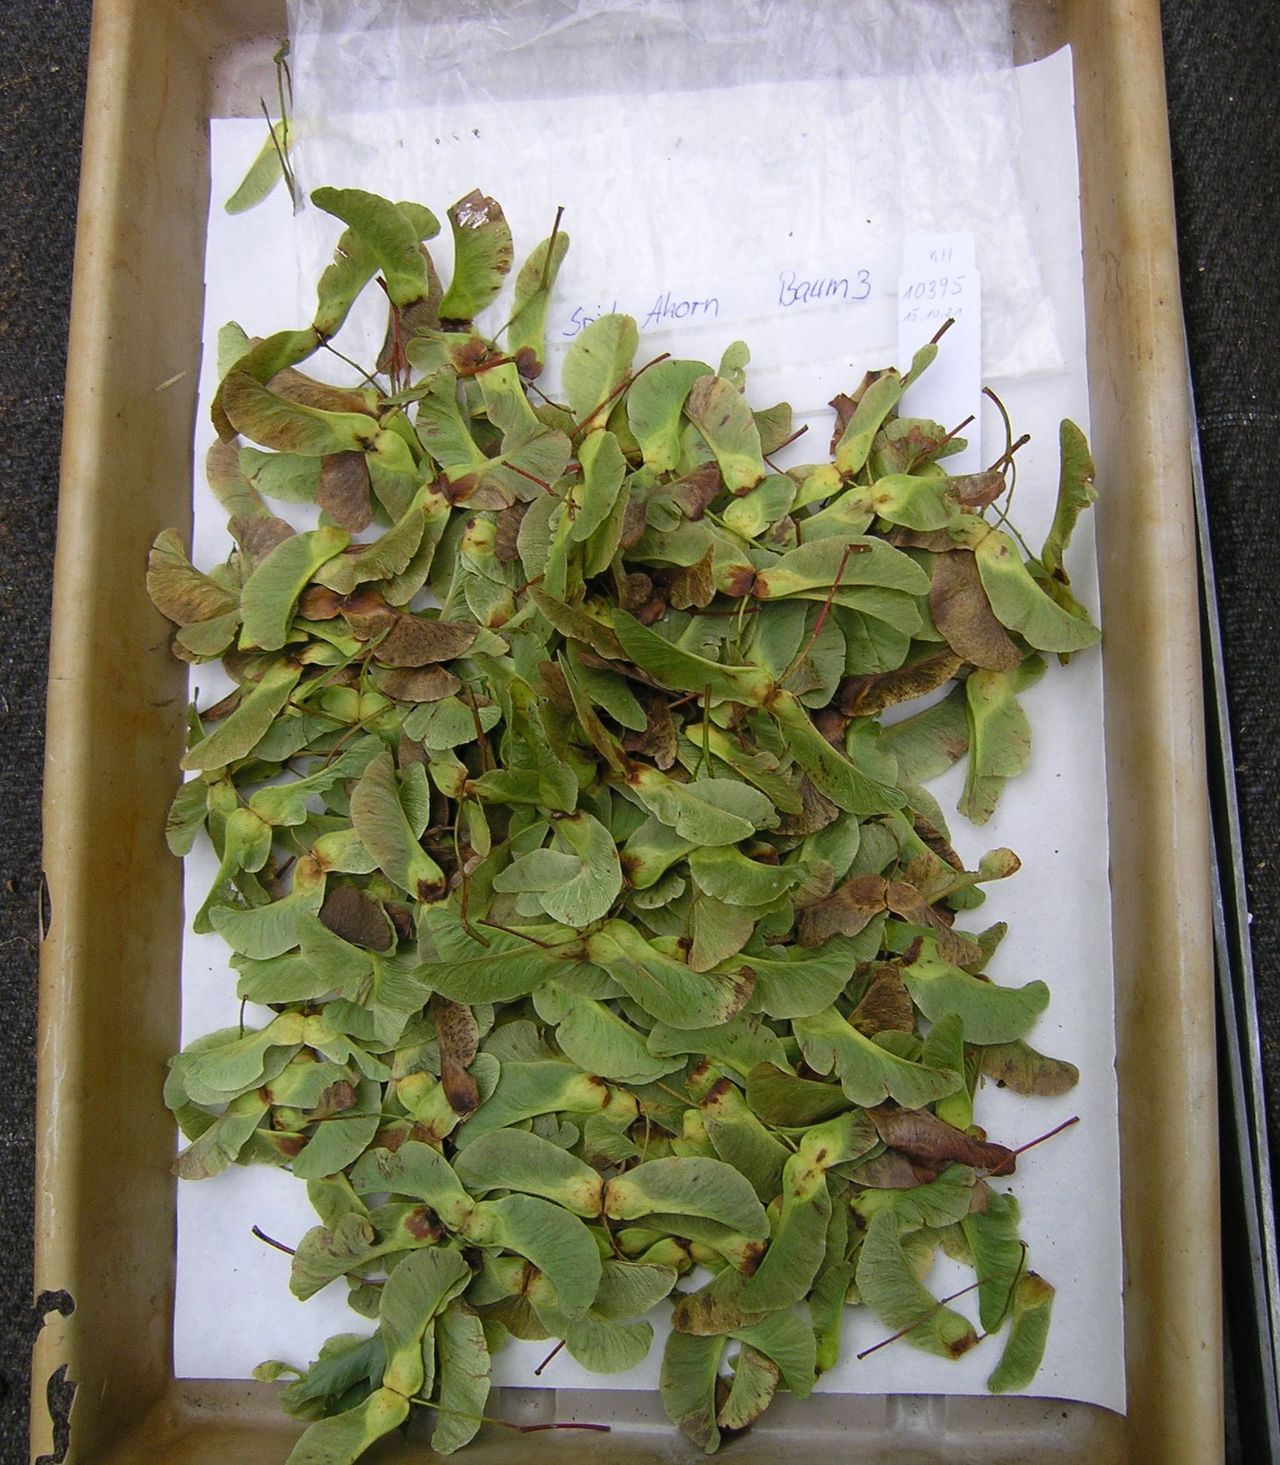 Seed sample of Norway maple